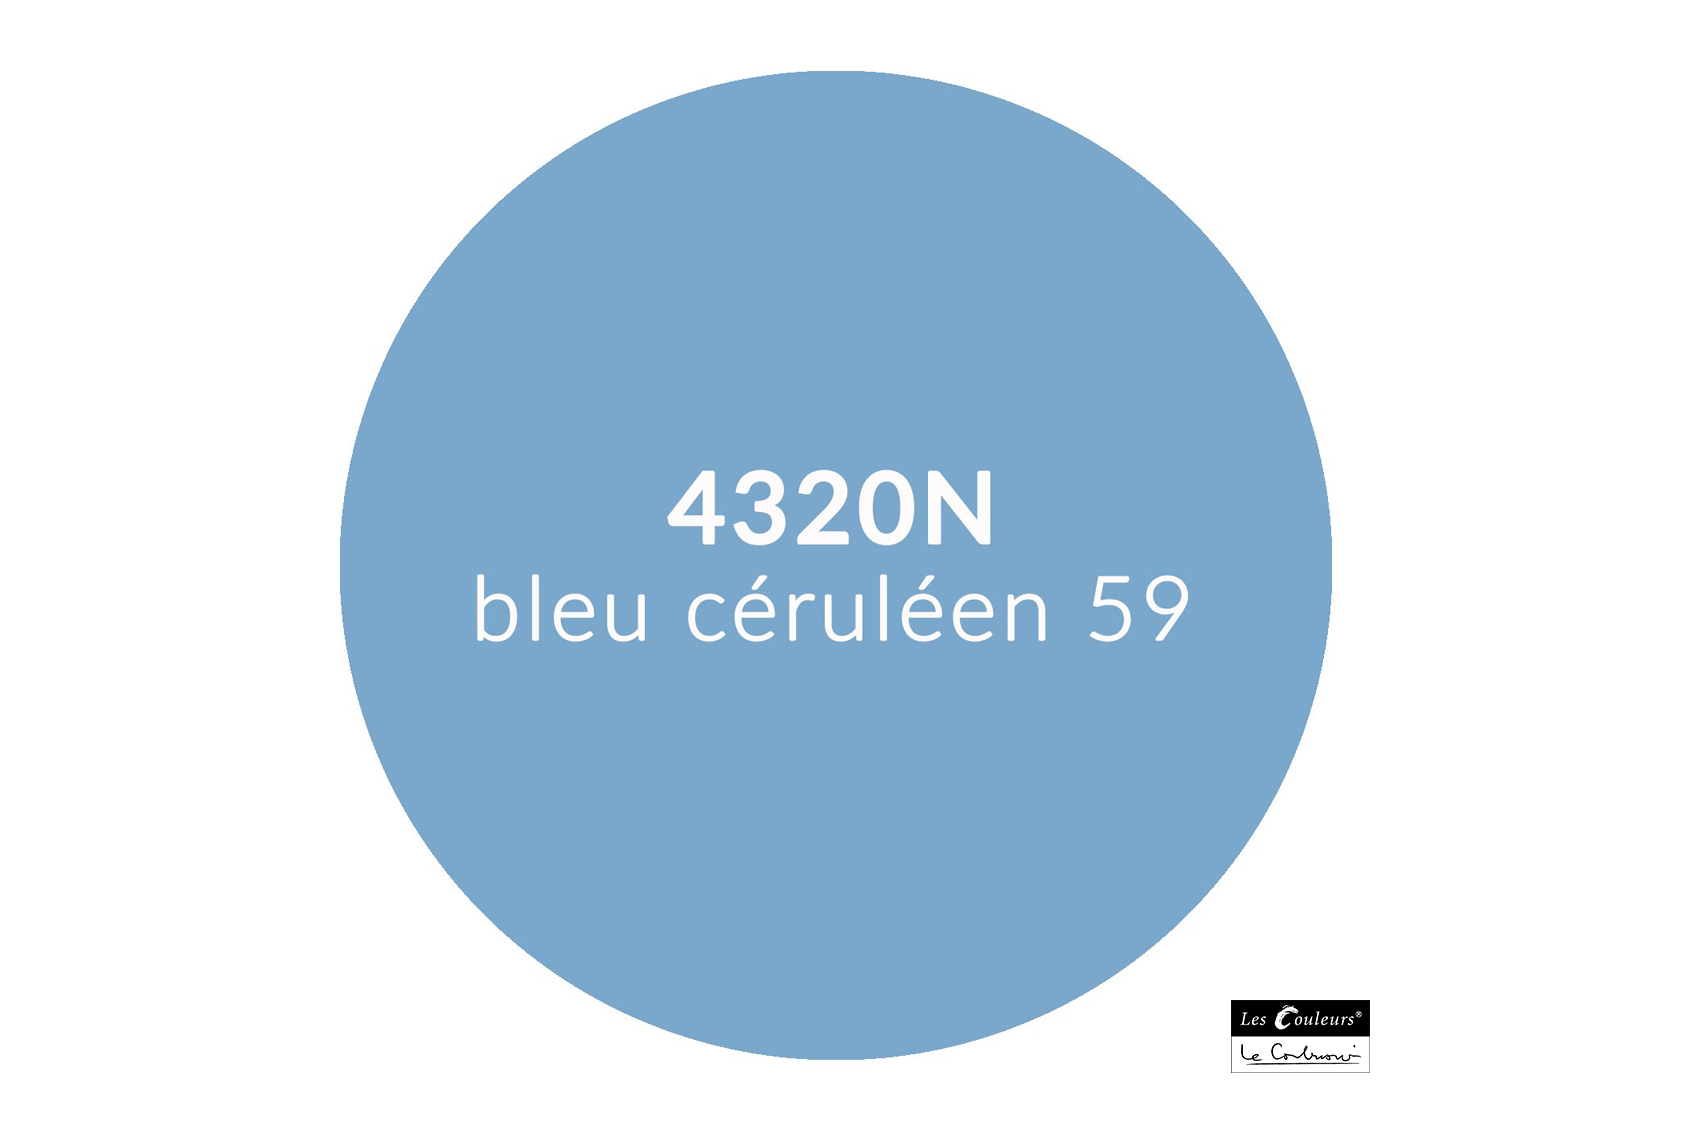 4320N bleu céruléen 59 Le Corbusier